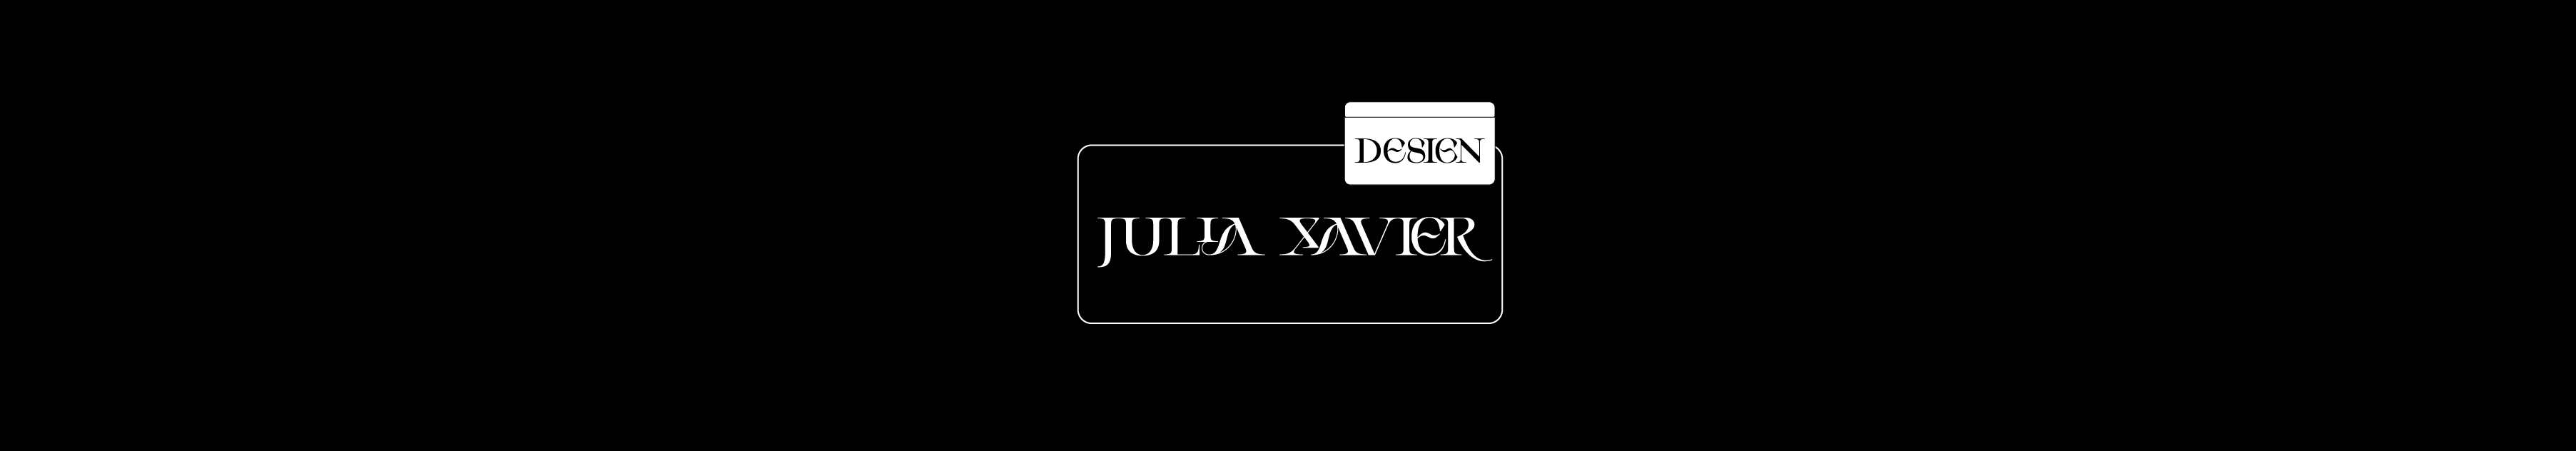 Júlia Xaviers profilbanner